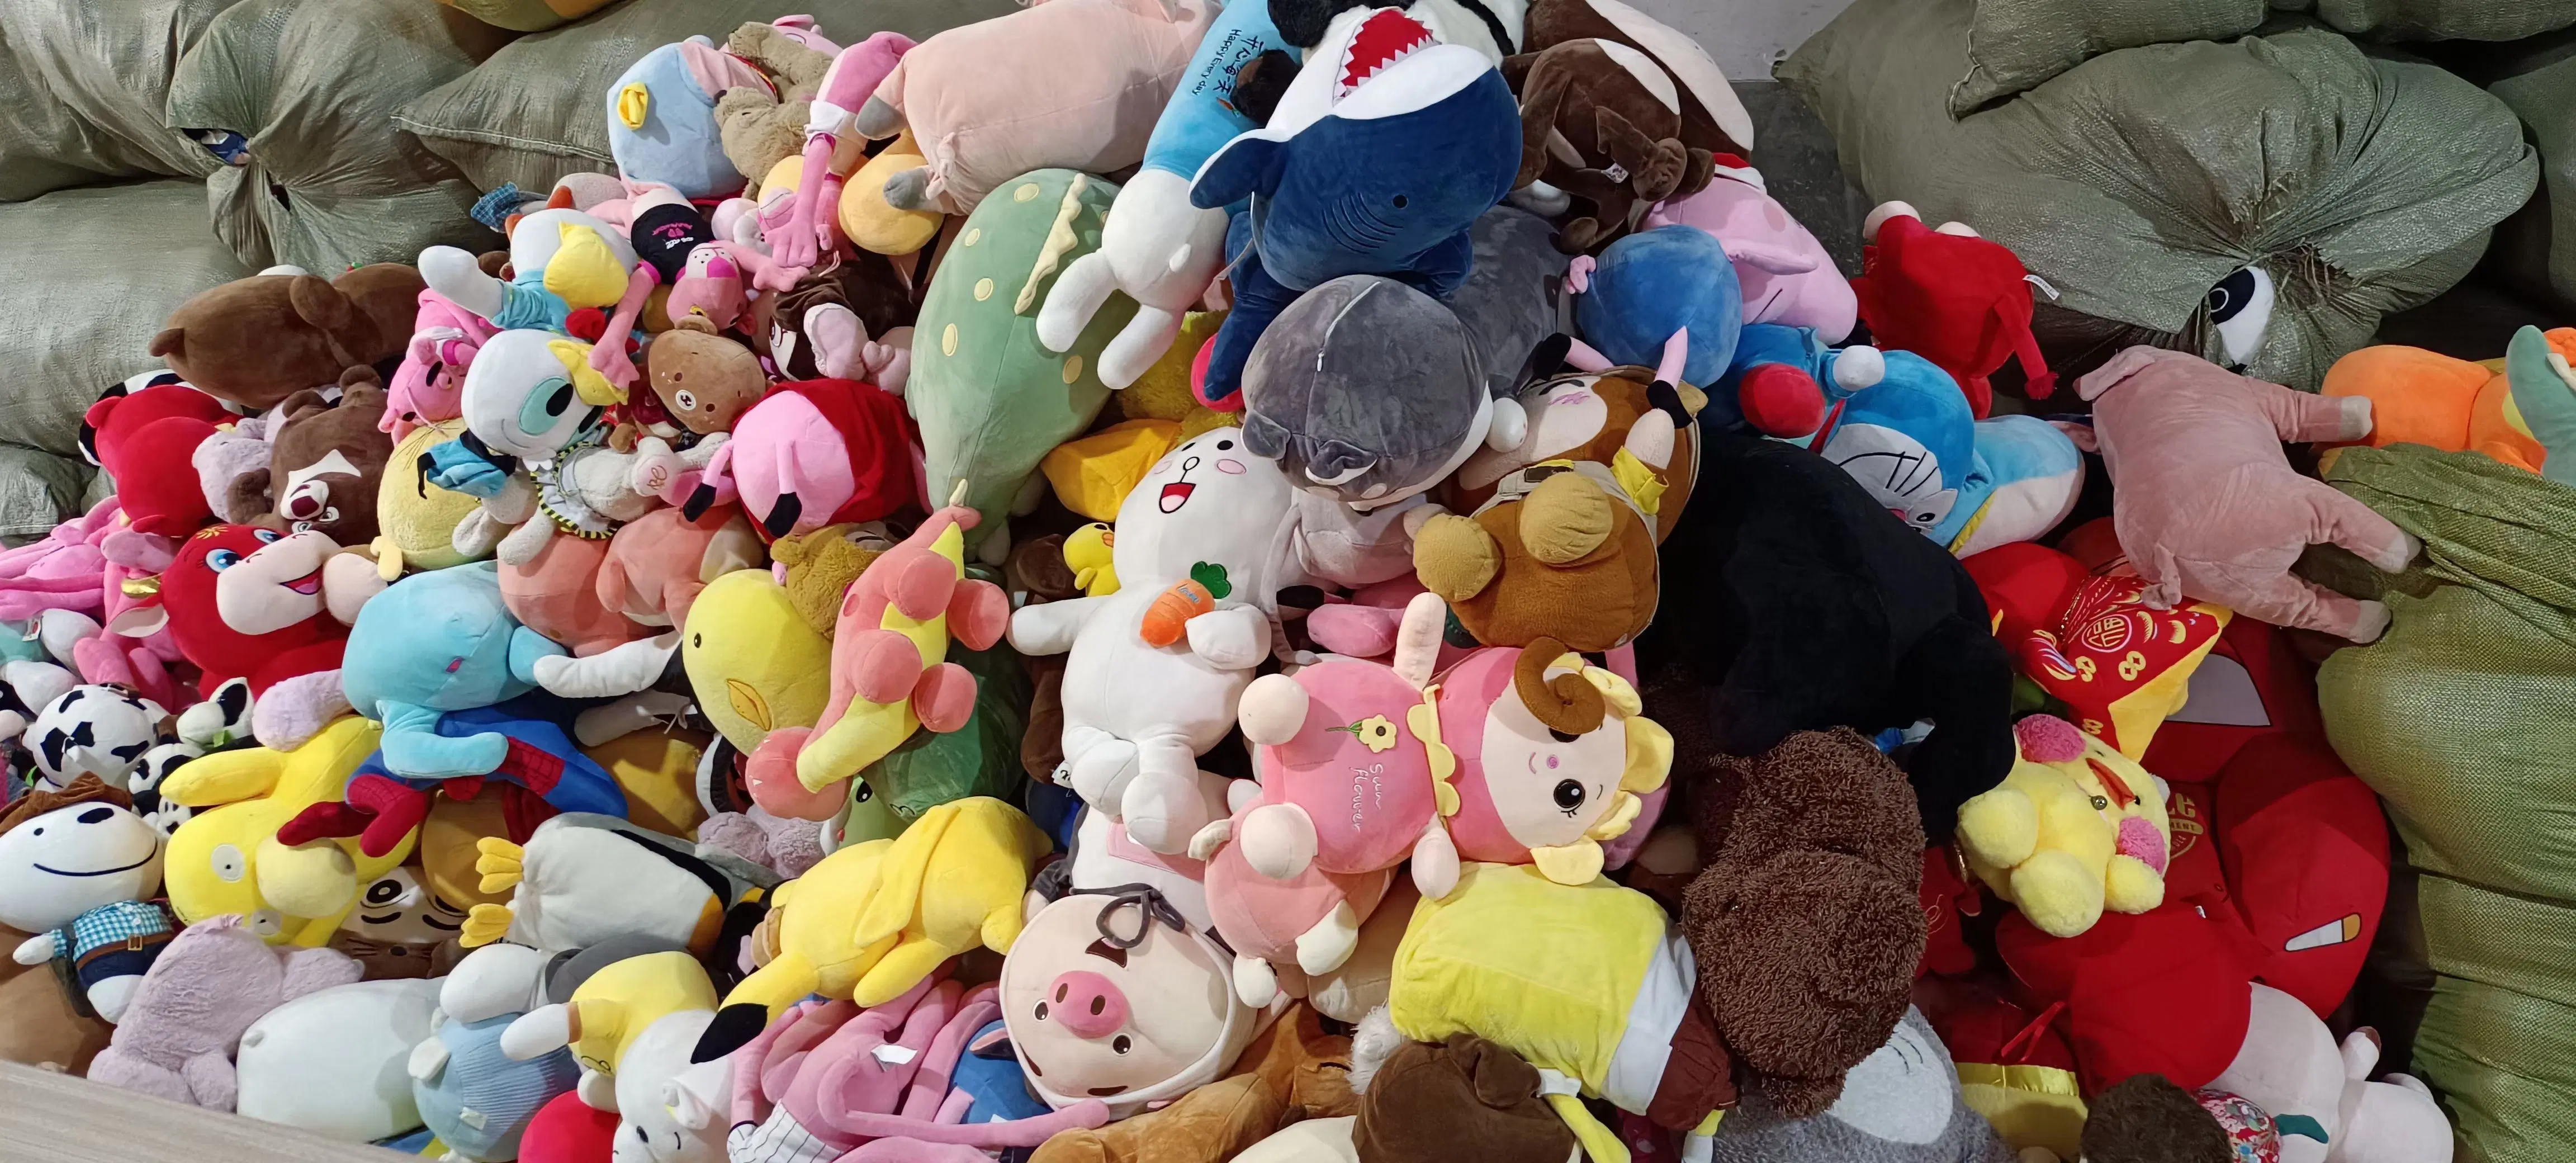 Juguete de peluche en Stock Toys vendidos por Kg varios Cartoon Juguetes de animales tirar almohadas